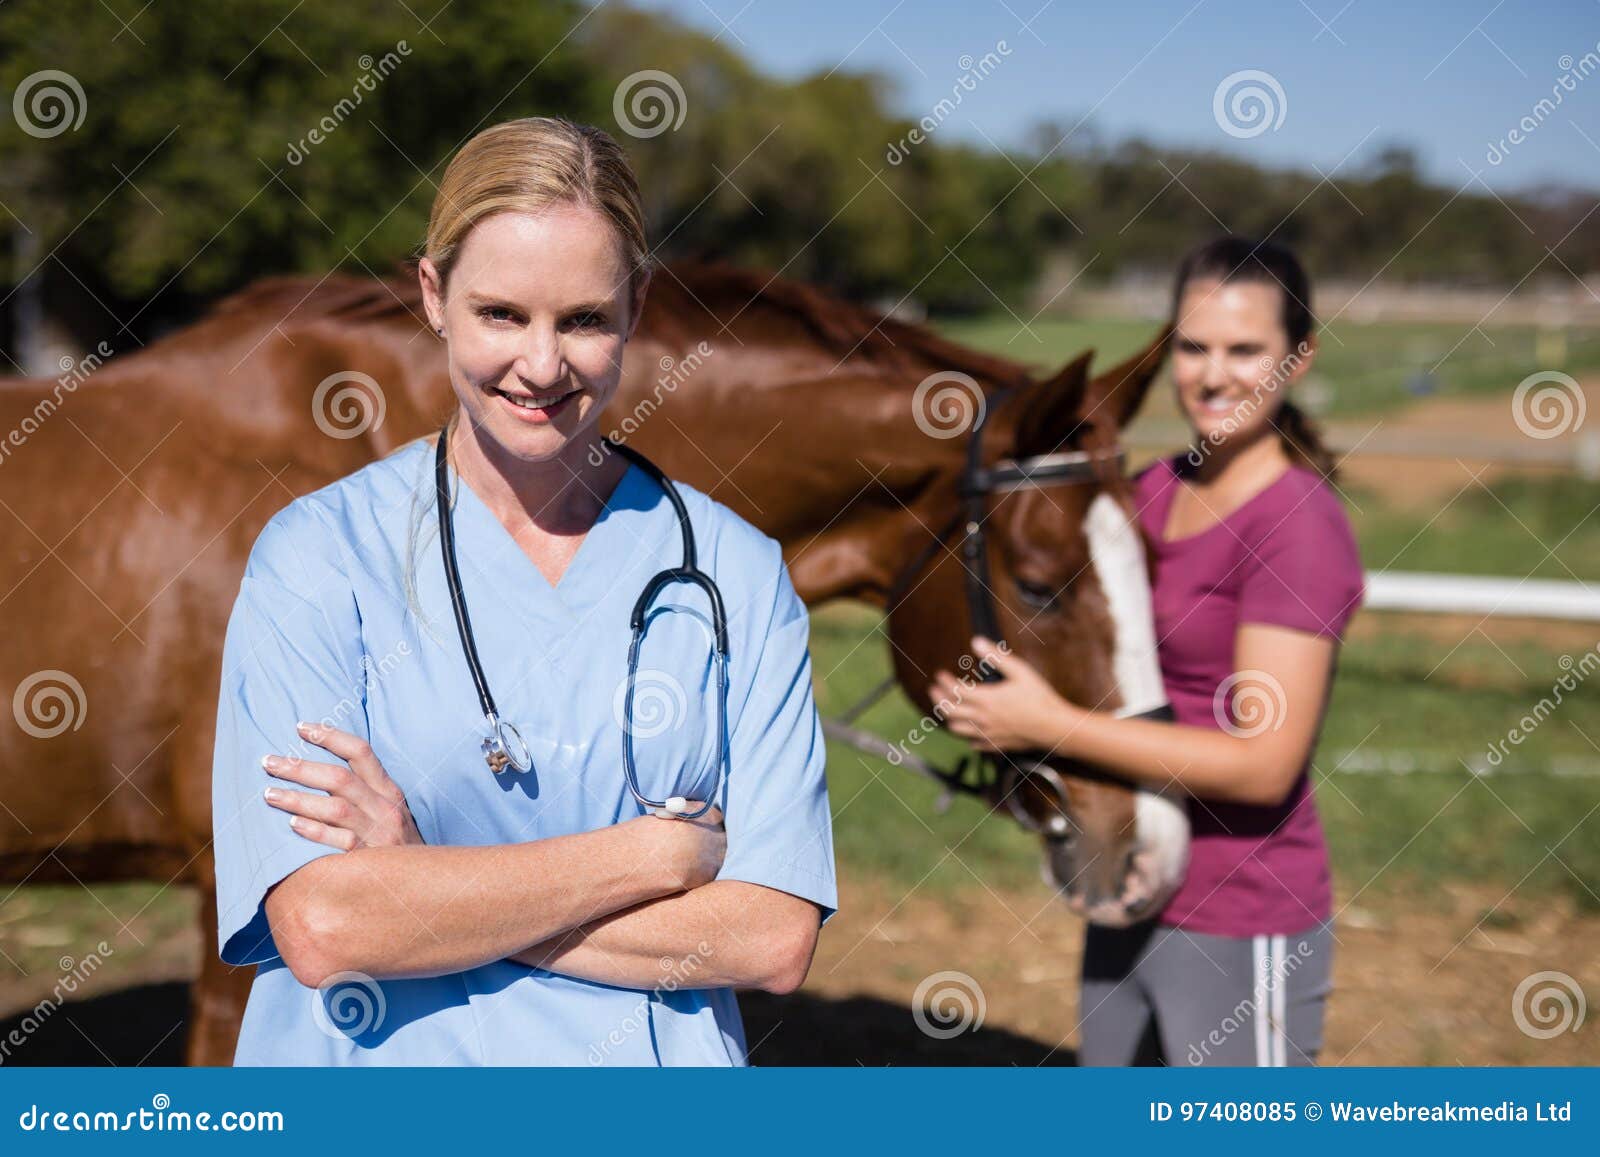 Mujeres teniendo sexo con caballos